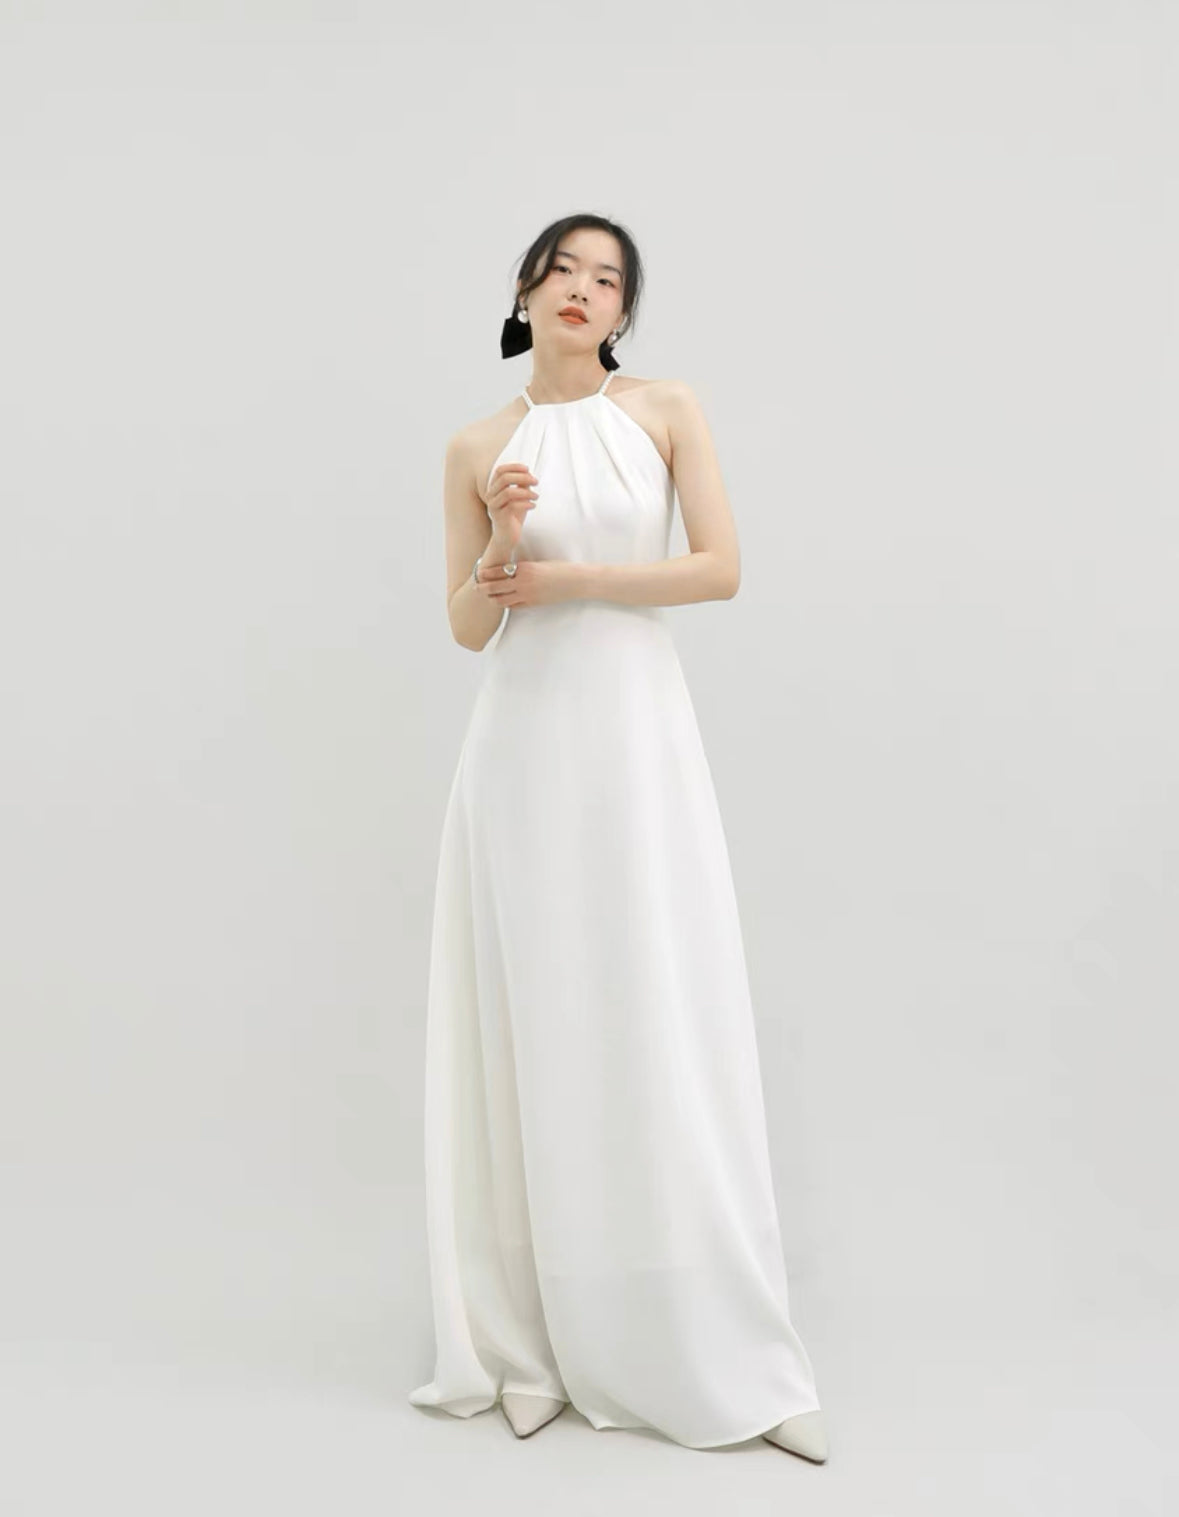 Beaded Cami Maxi Dress in White